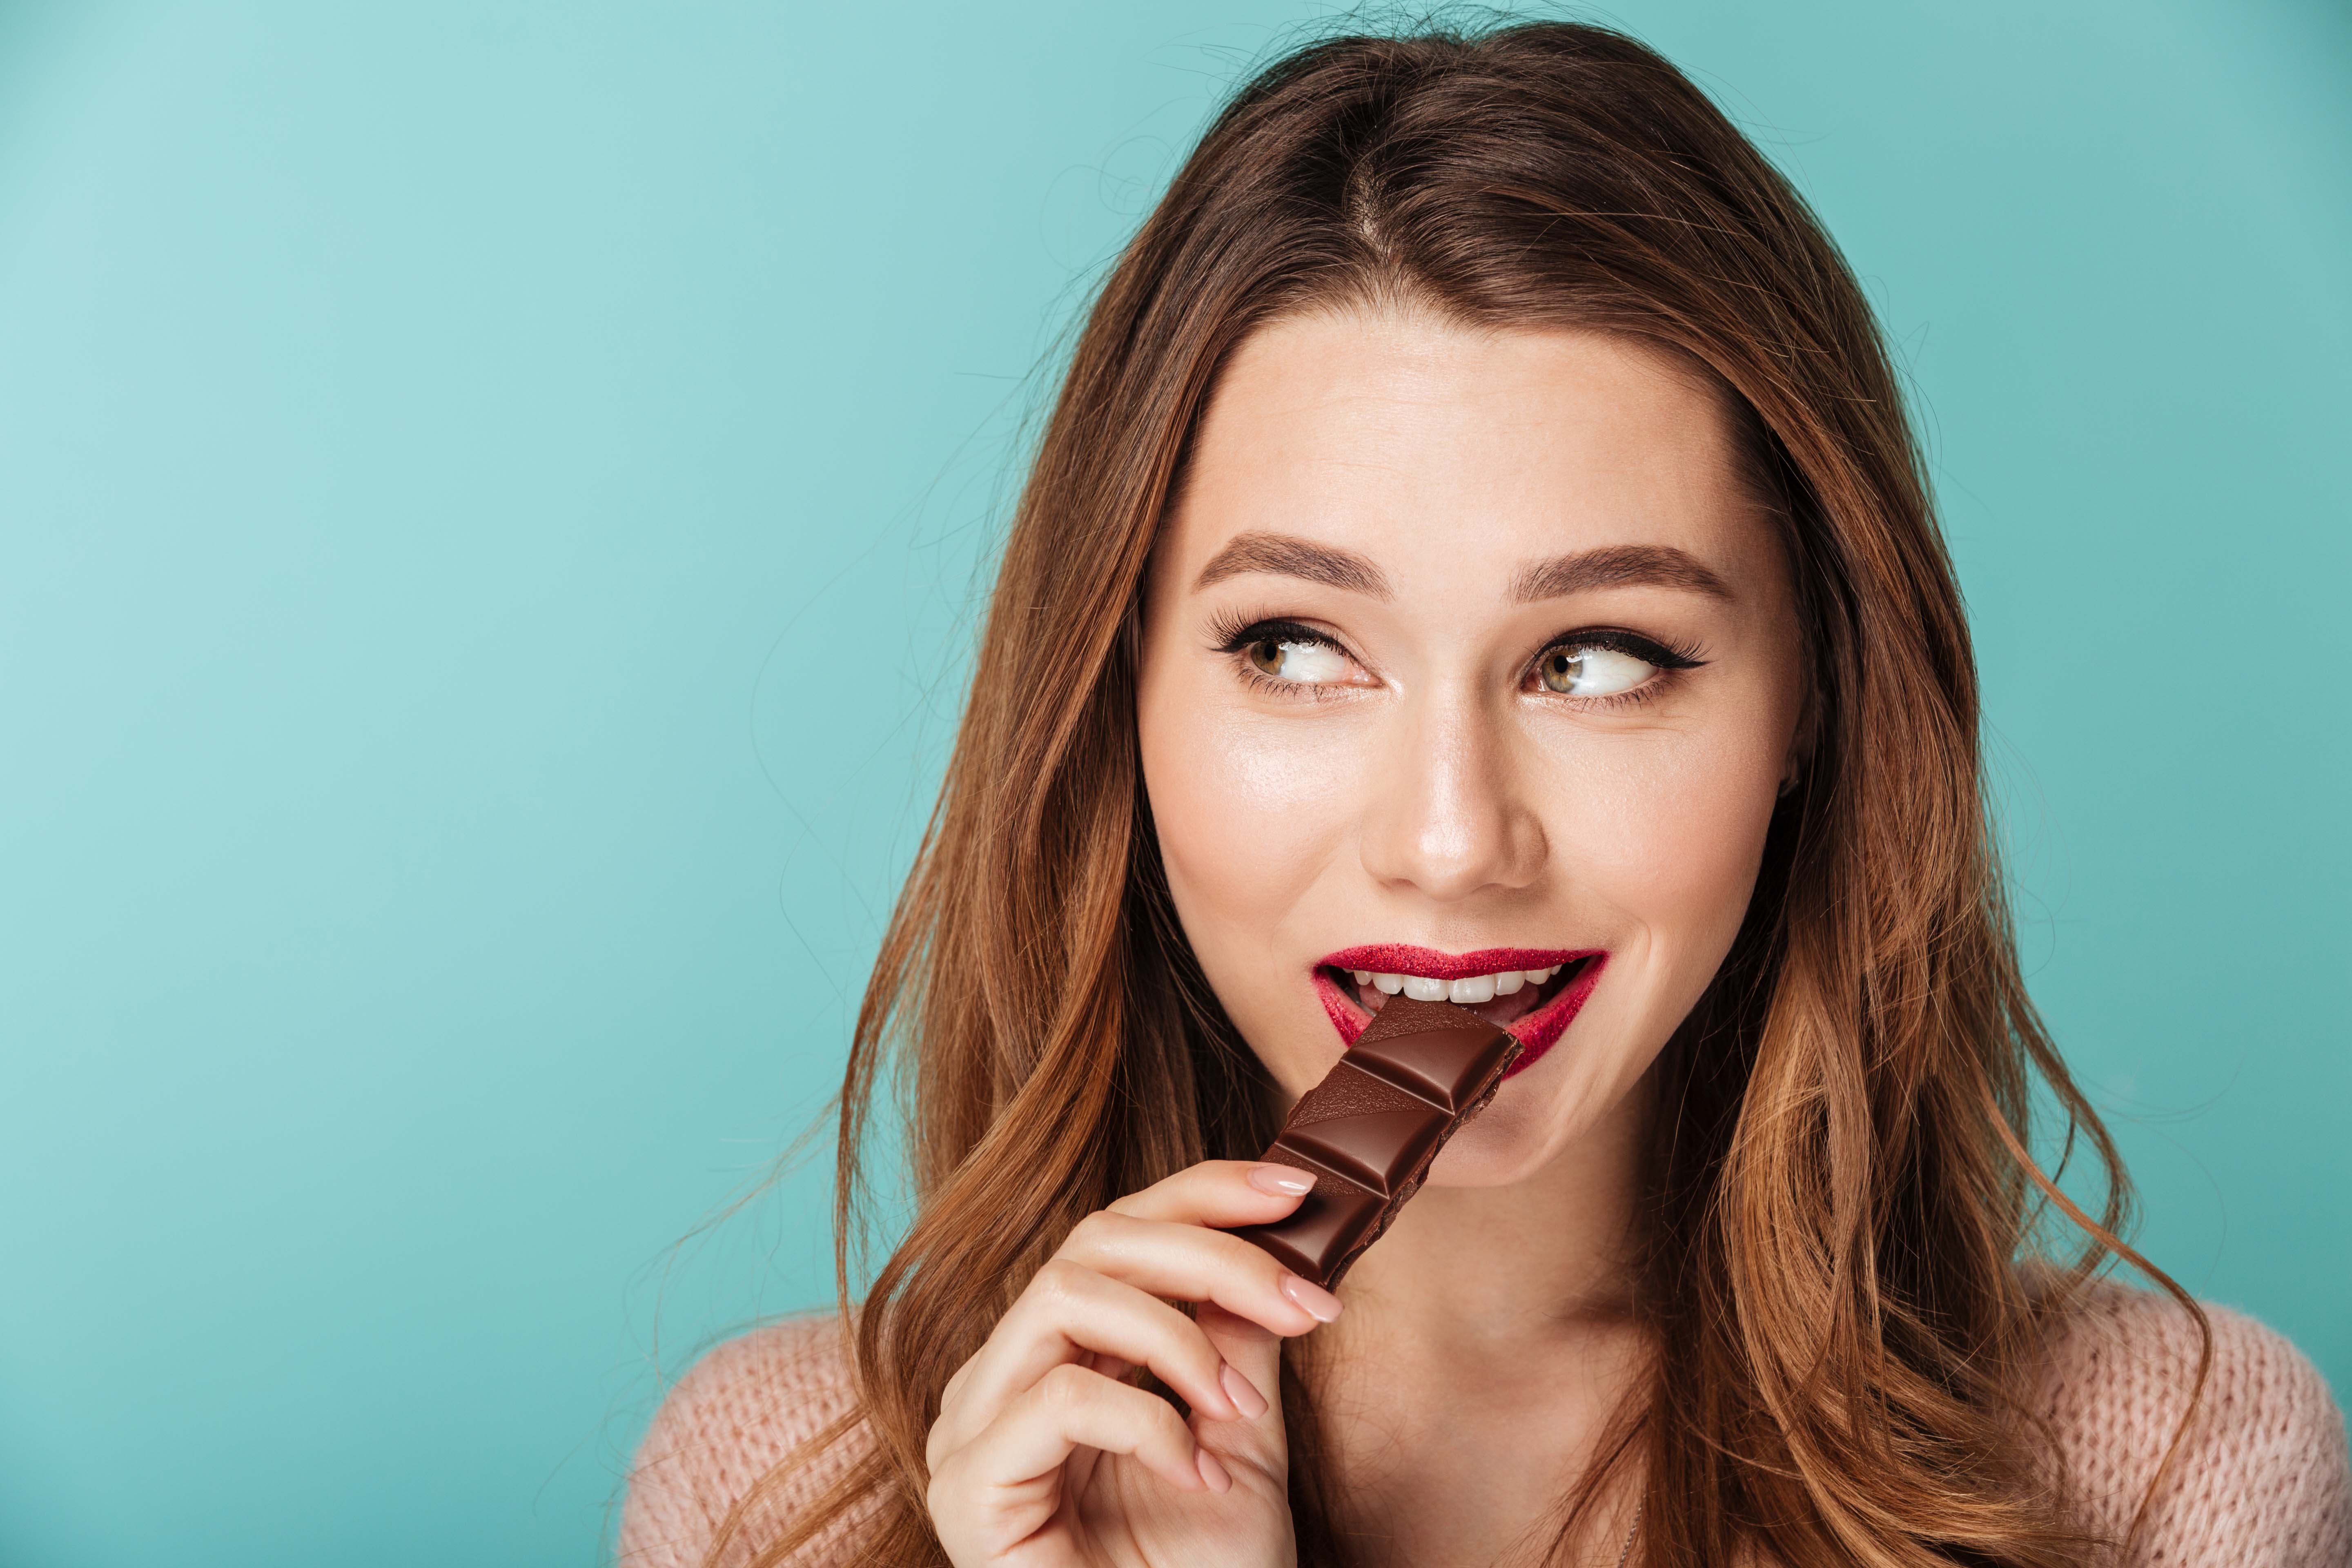 Шоколадки кушаем. Ест шоколад. Женщина ест шоколад. Девушка ест шоколад. Девушка в шоколаде.